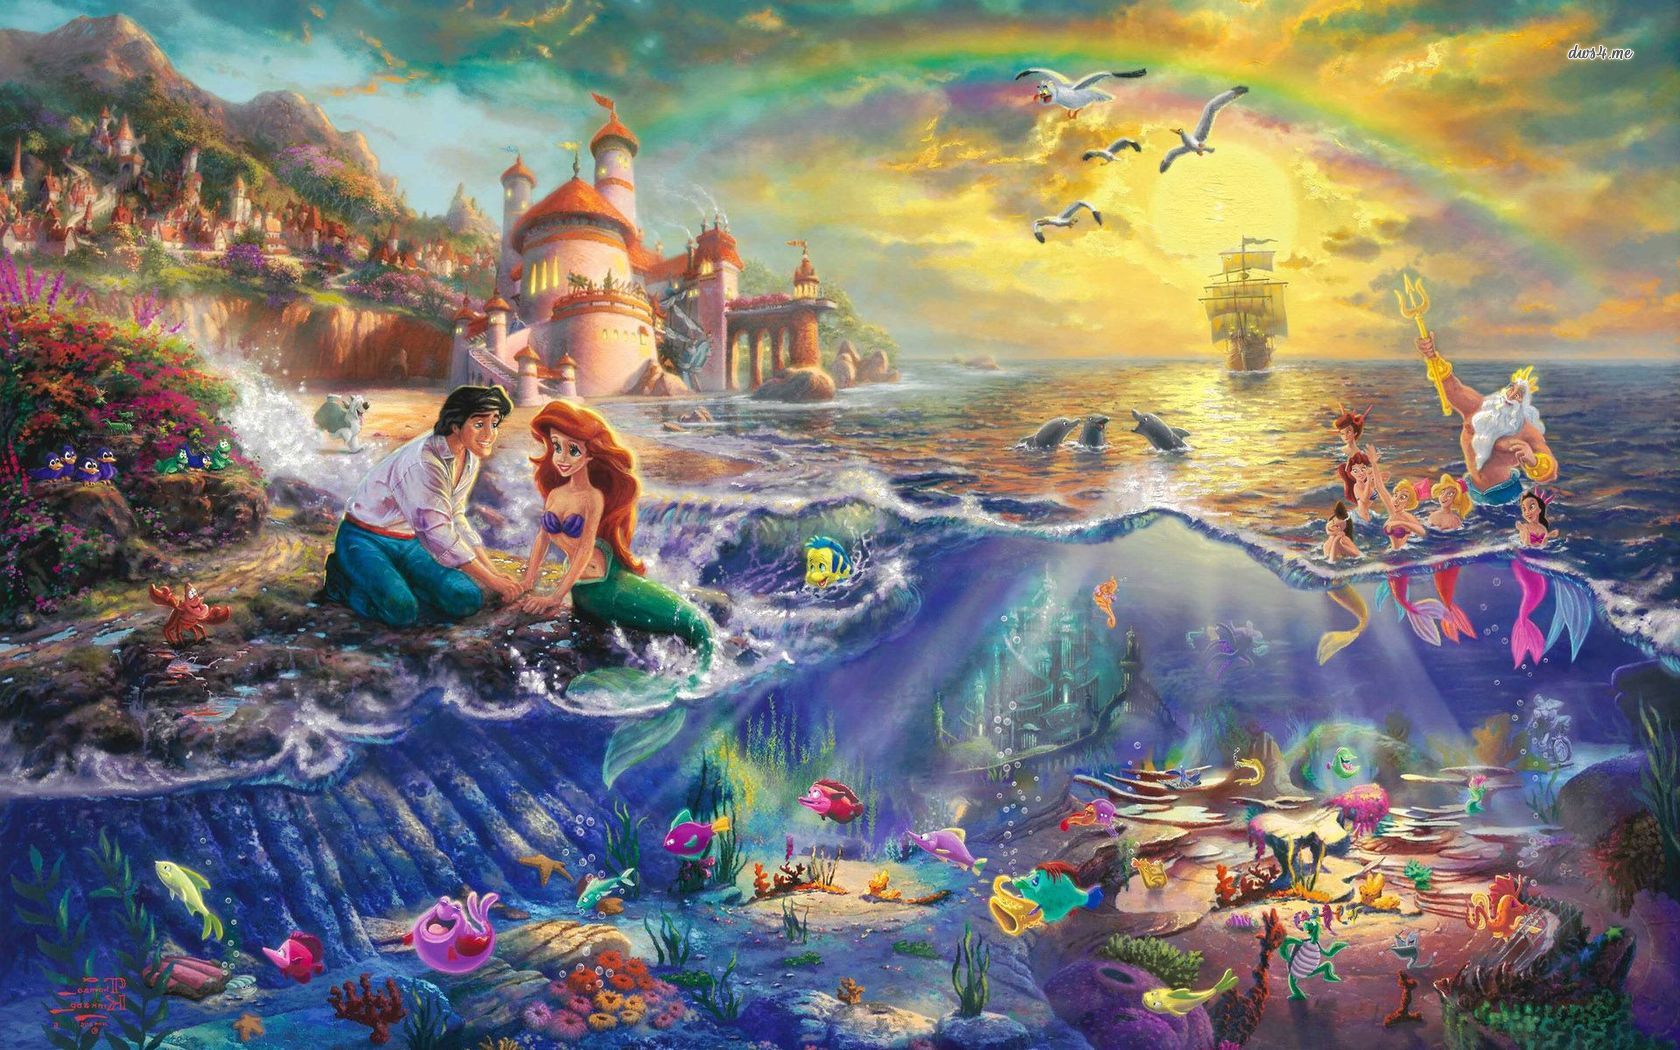 Ariel wallpaper